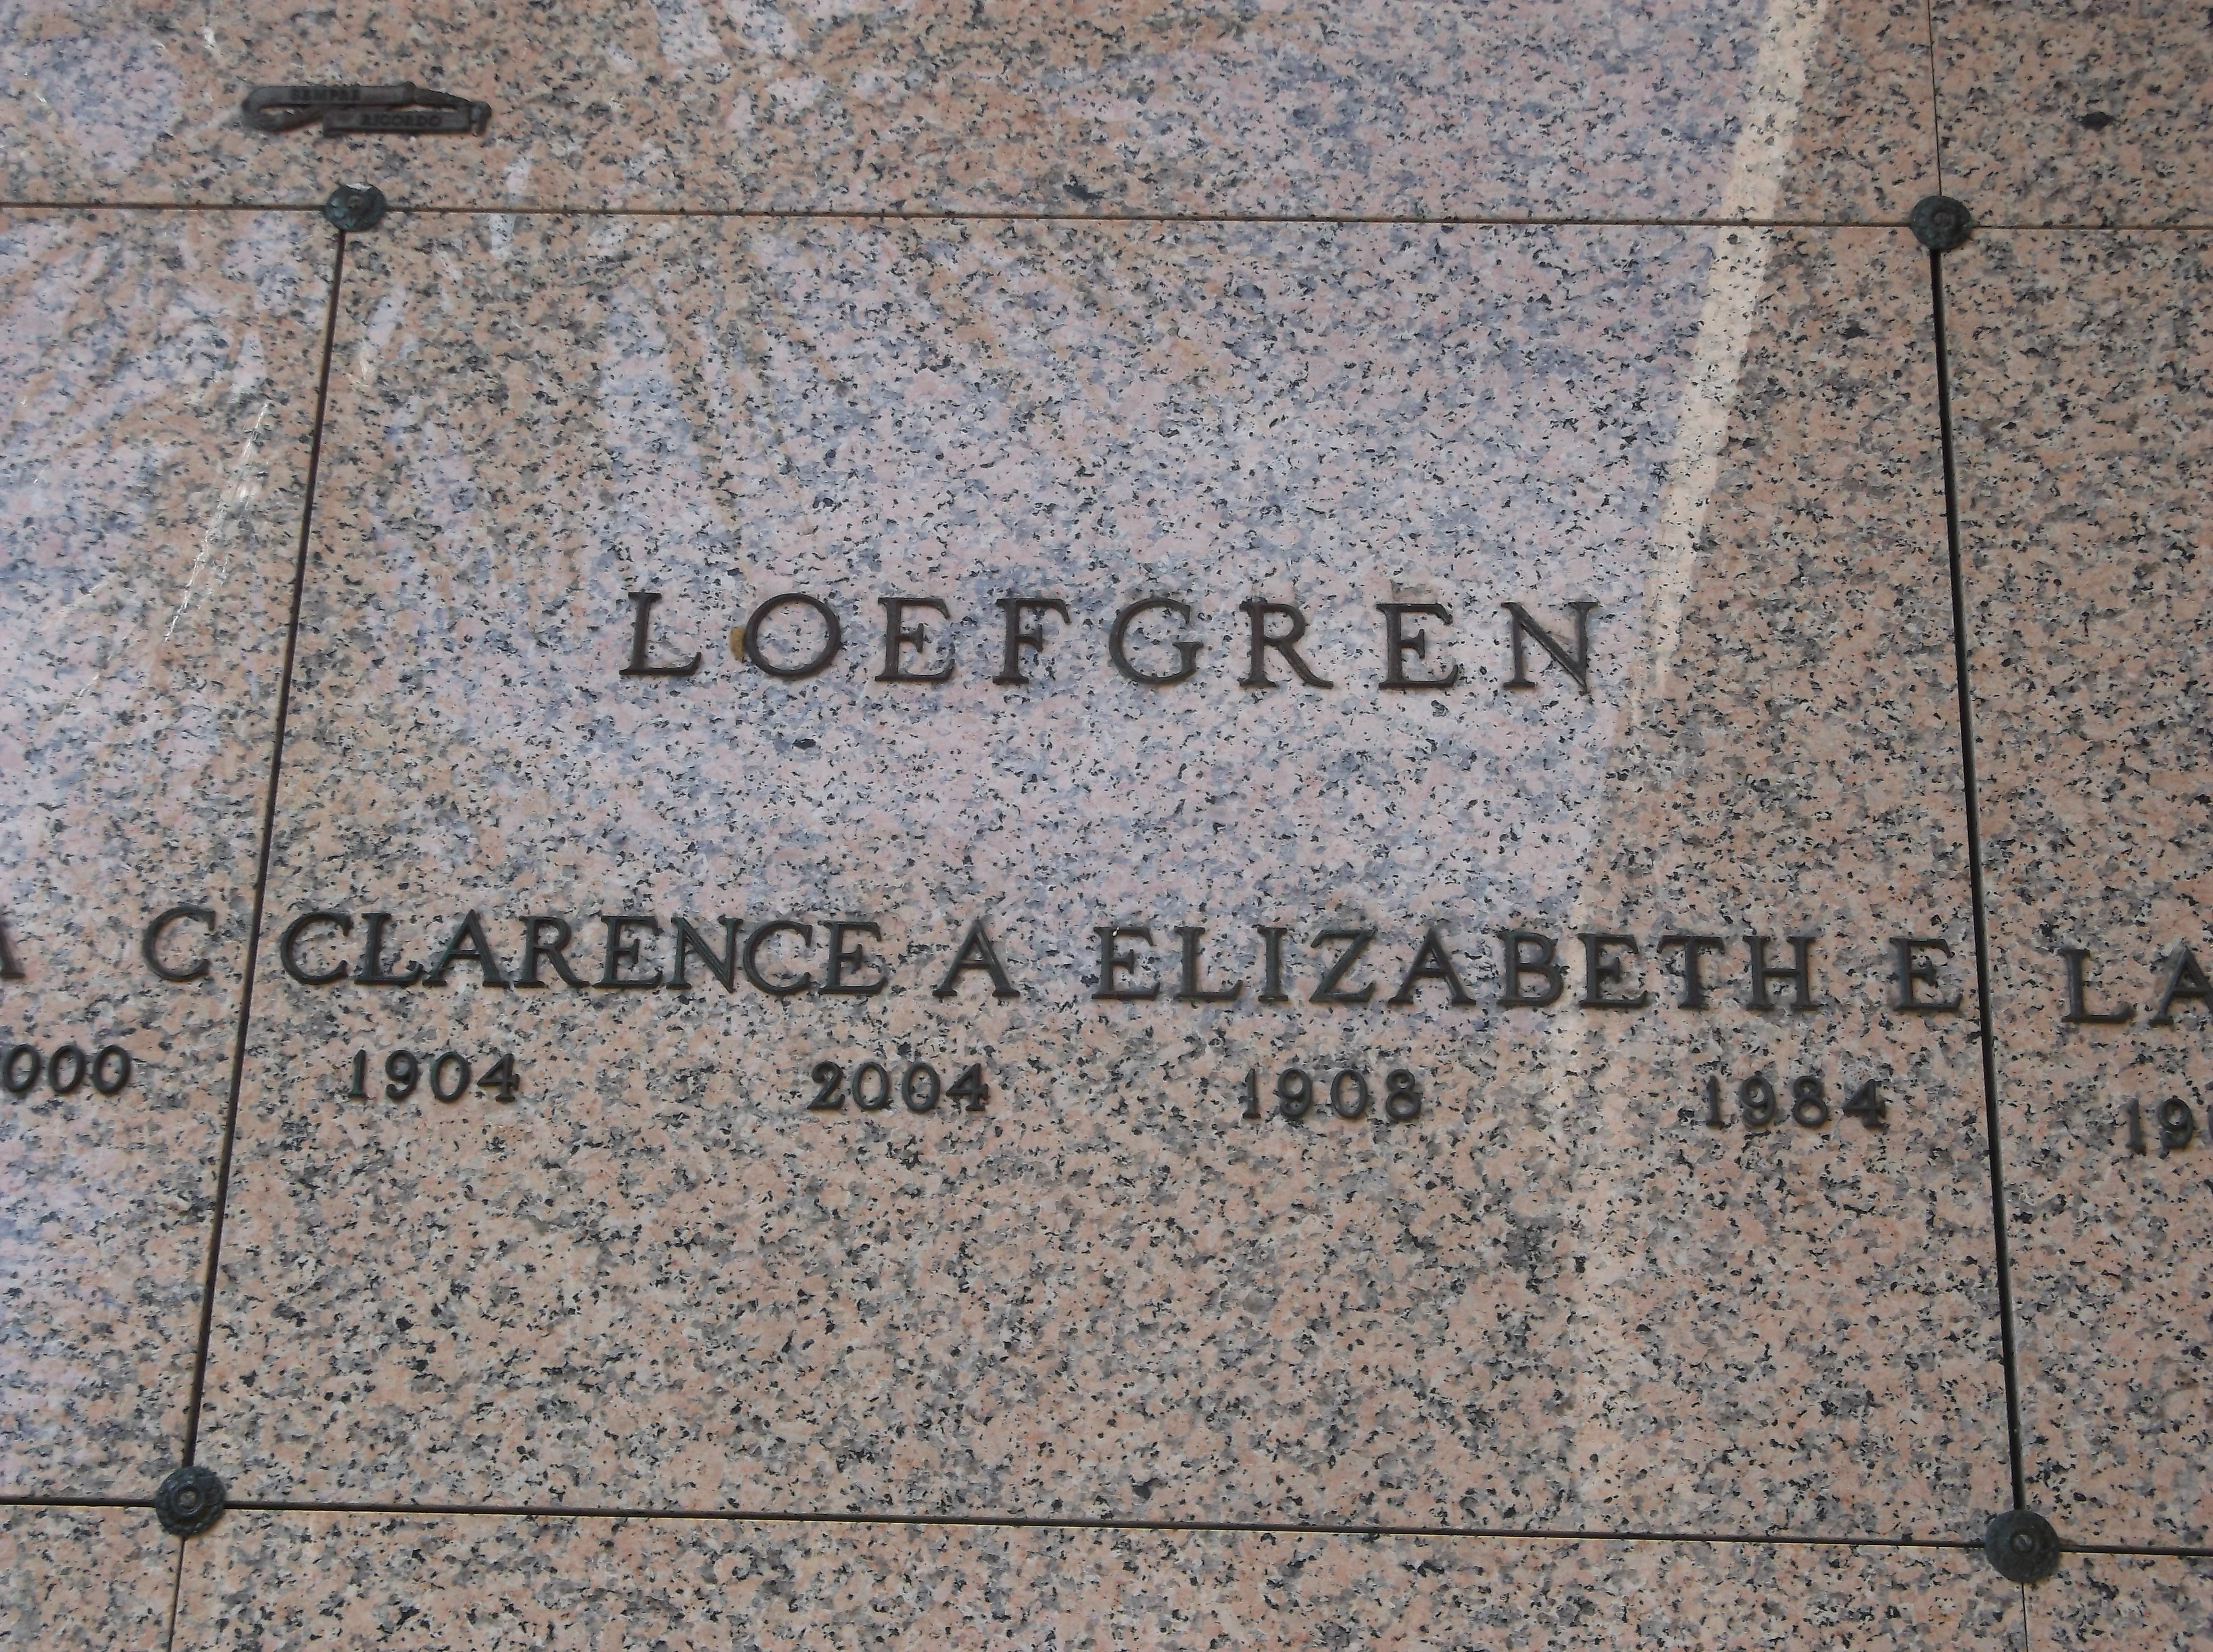 Elizabeth E Loefgren